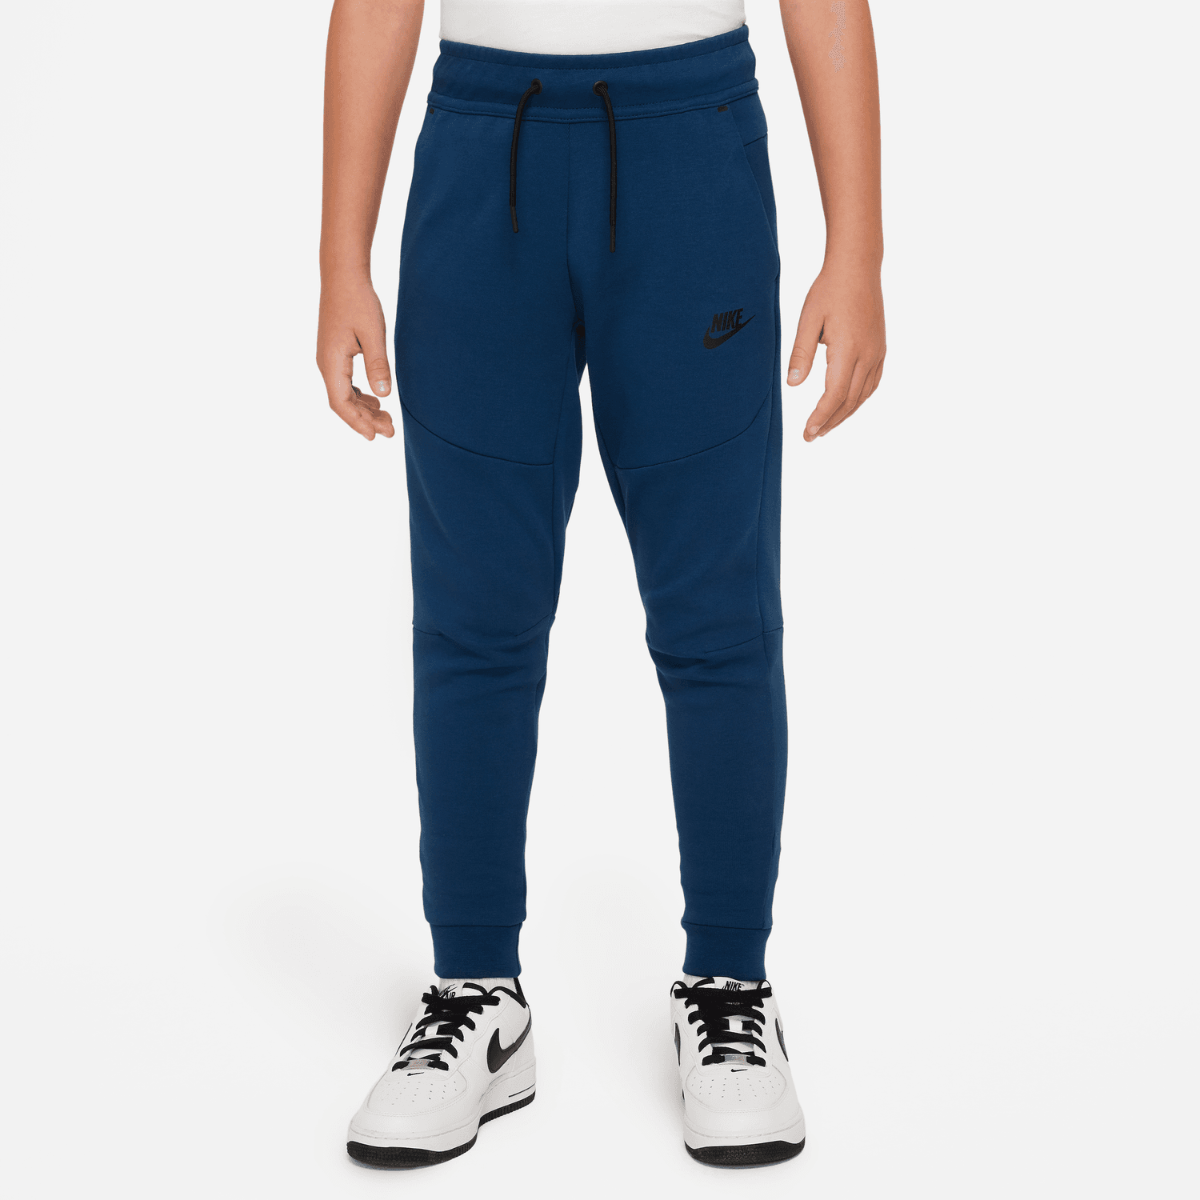 Pantalon jogging Nike Tech Fleece Junior - Bleu Marine/Noir